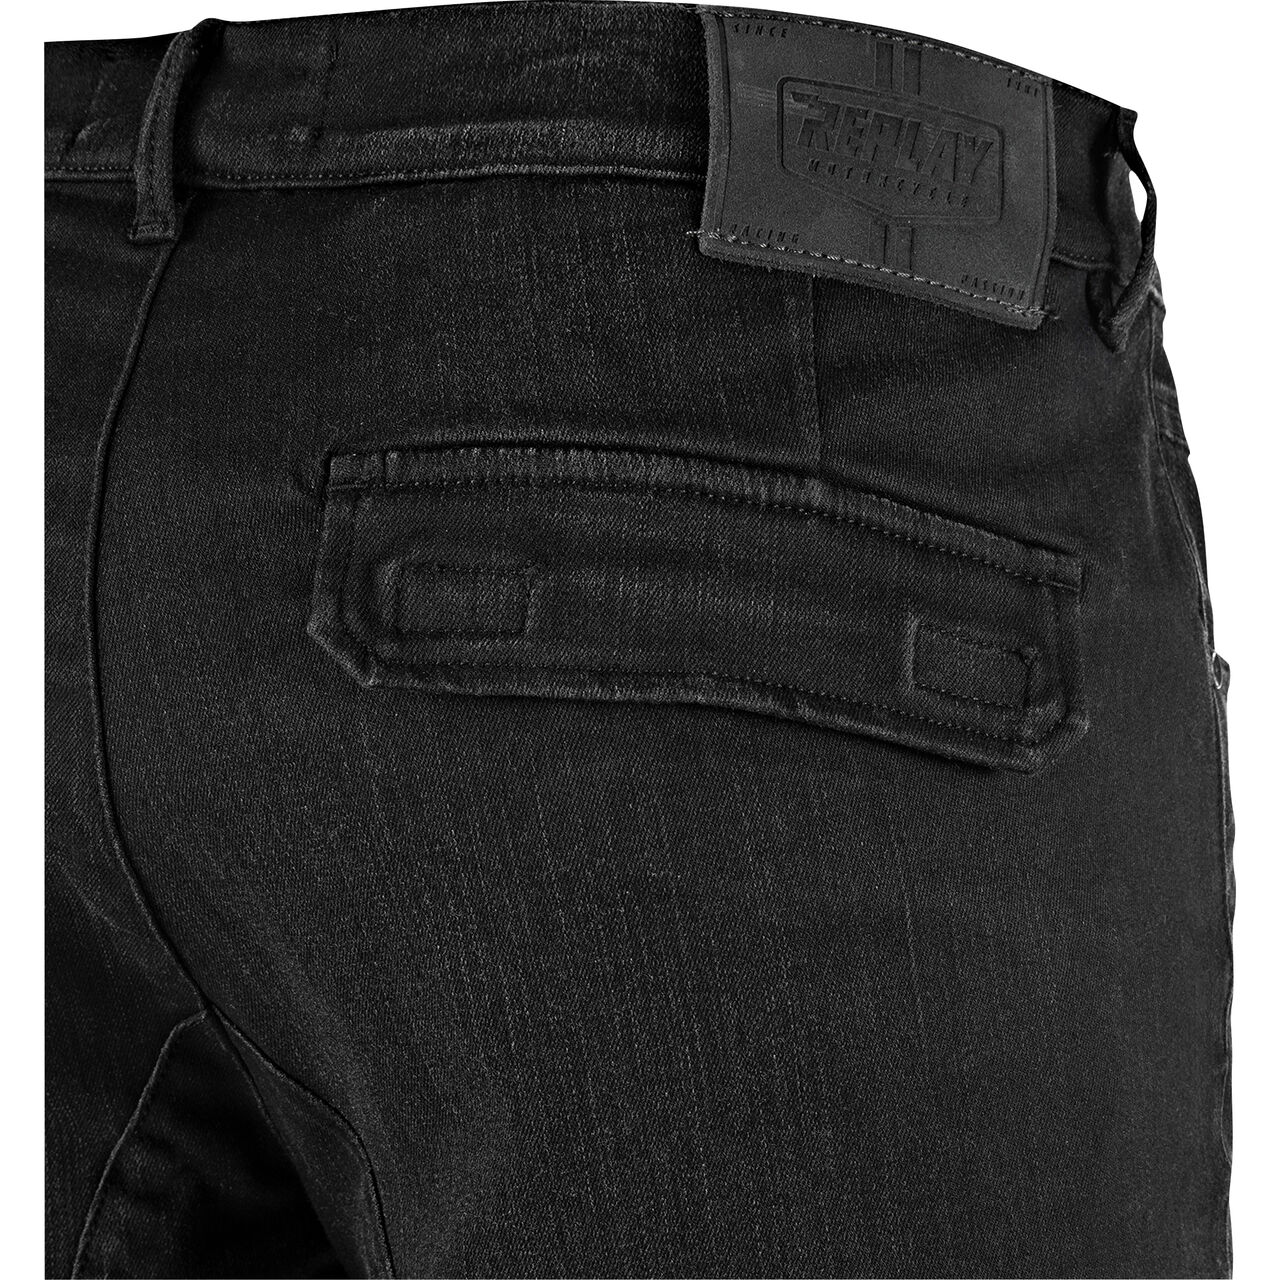 Shift Jeans black 34/32